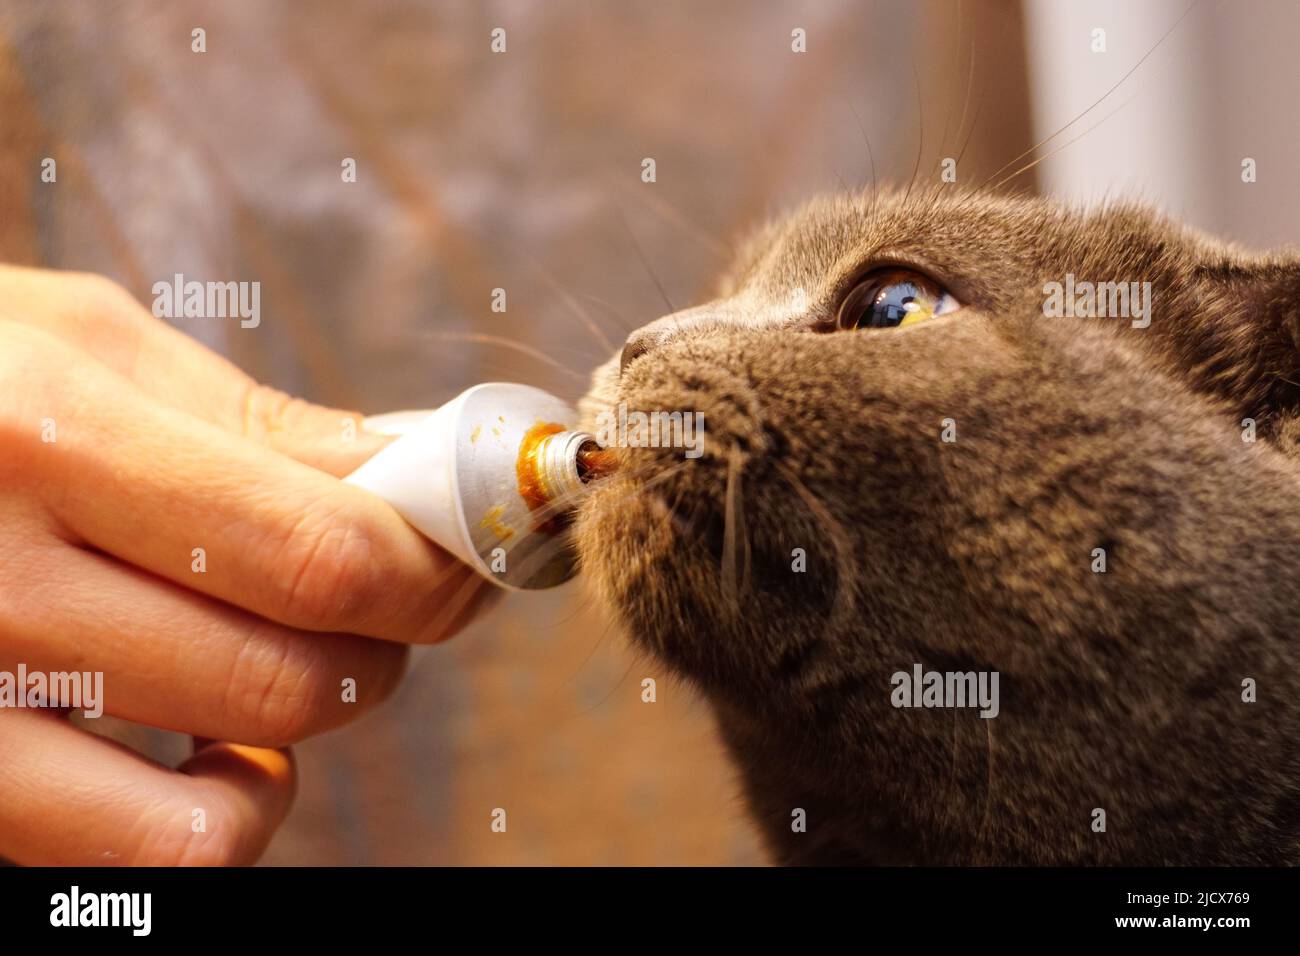 Cute scottish fold cat eating malt paste close up view Stock Photo